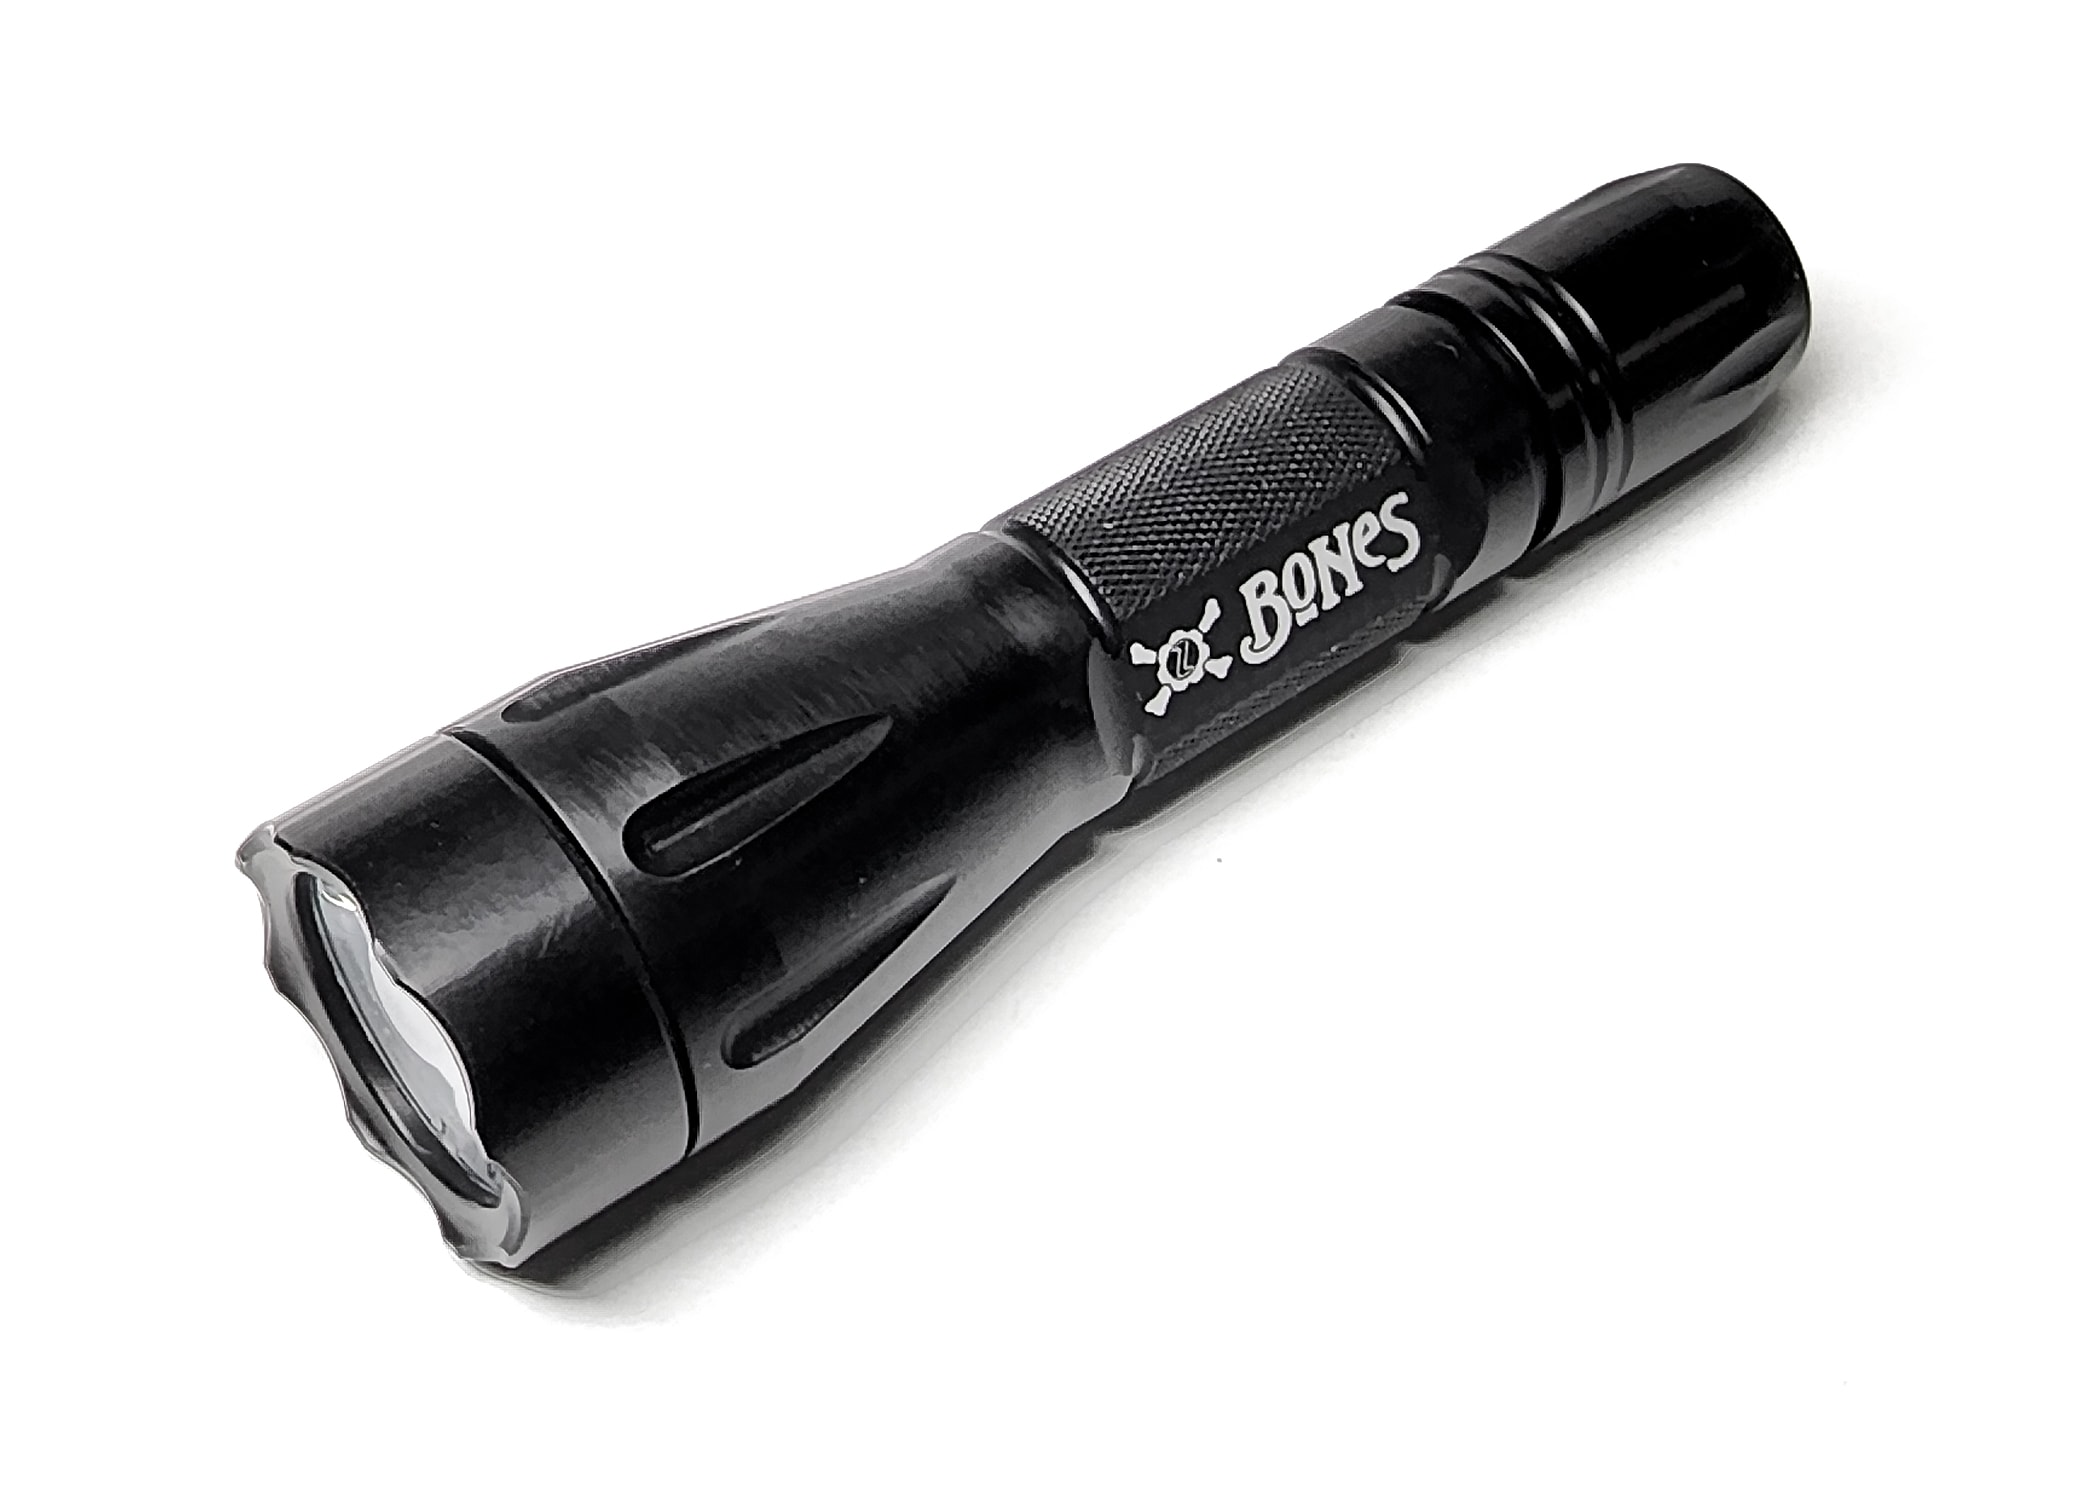 Bones flashlight. Black Anodized Mil-Spec Type III.